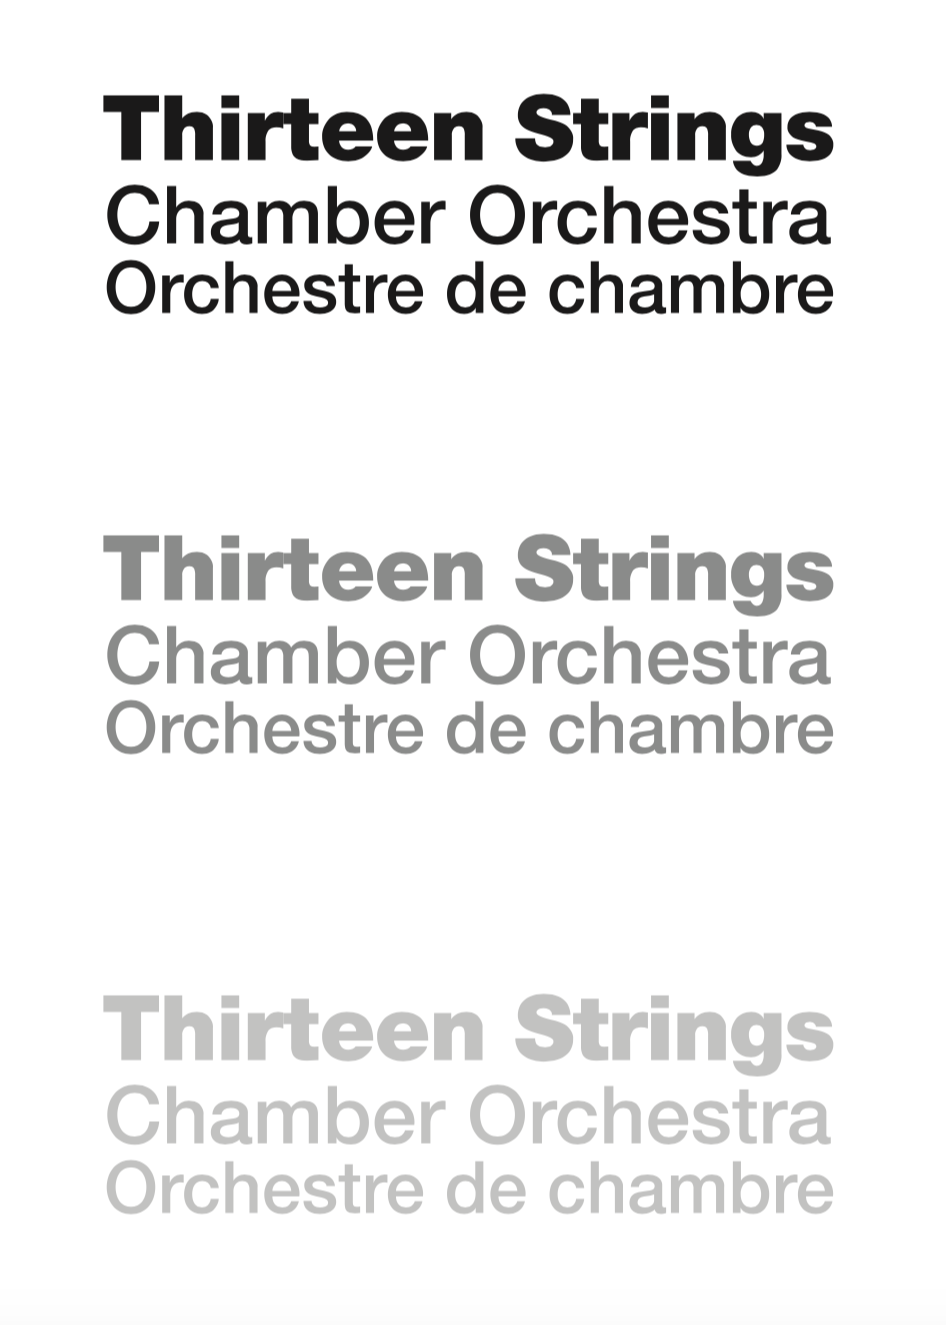 ORCHESTRE DE CHAMBRE THIRTEEN STRINGS logo